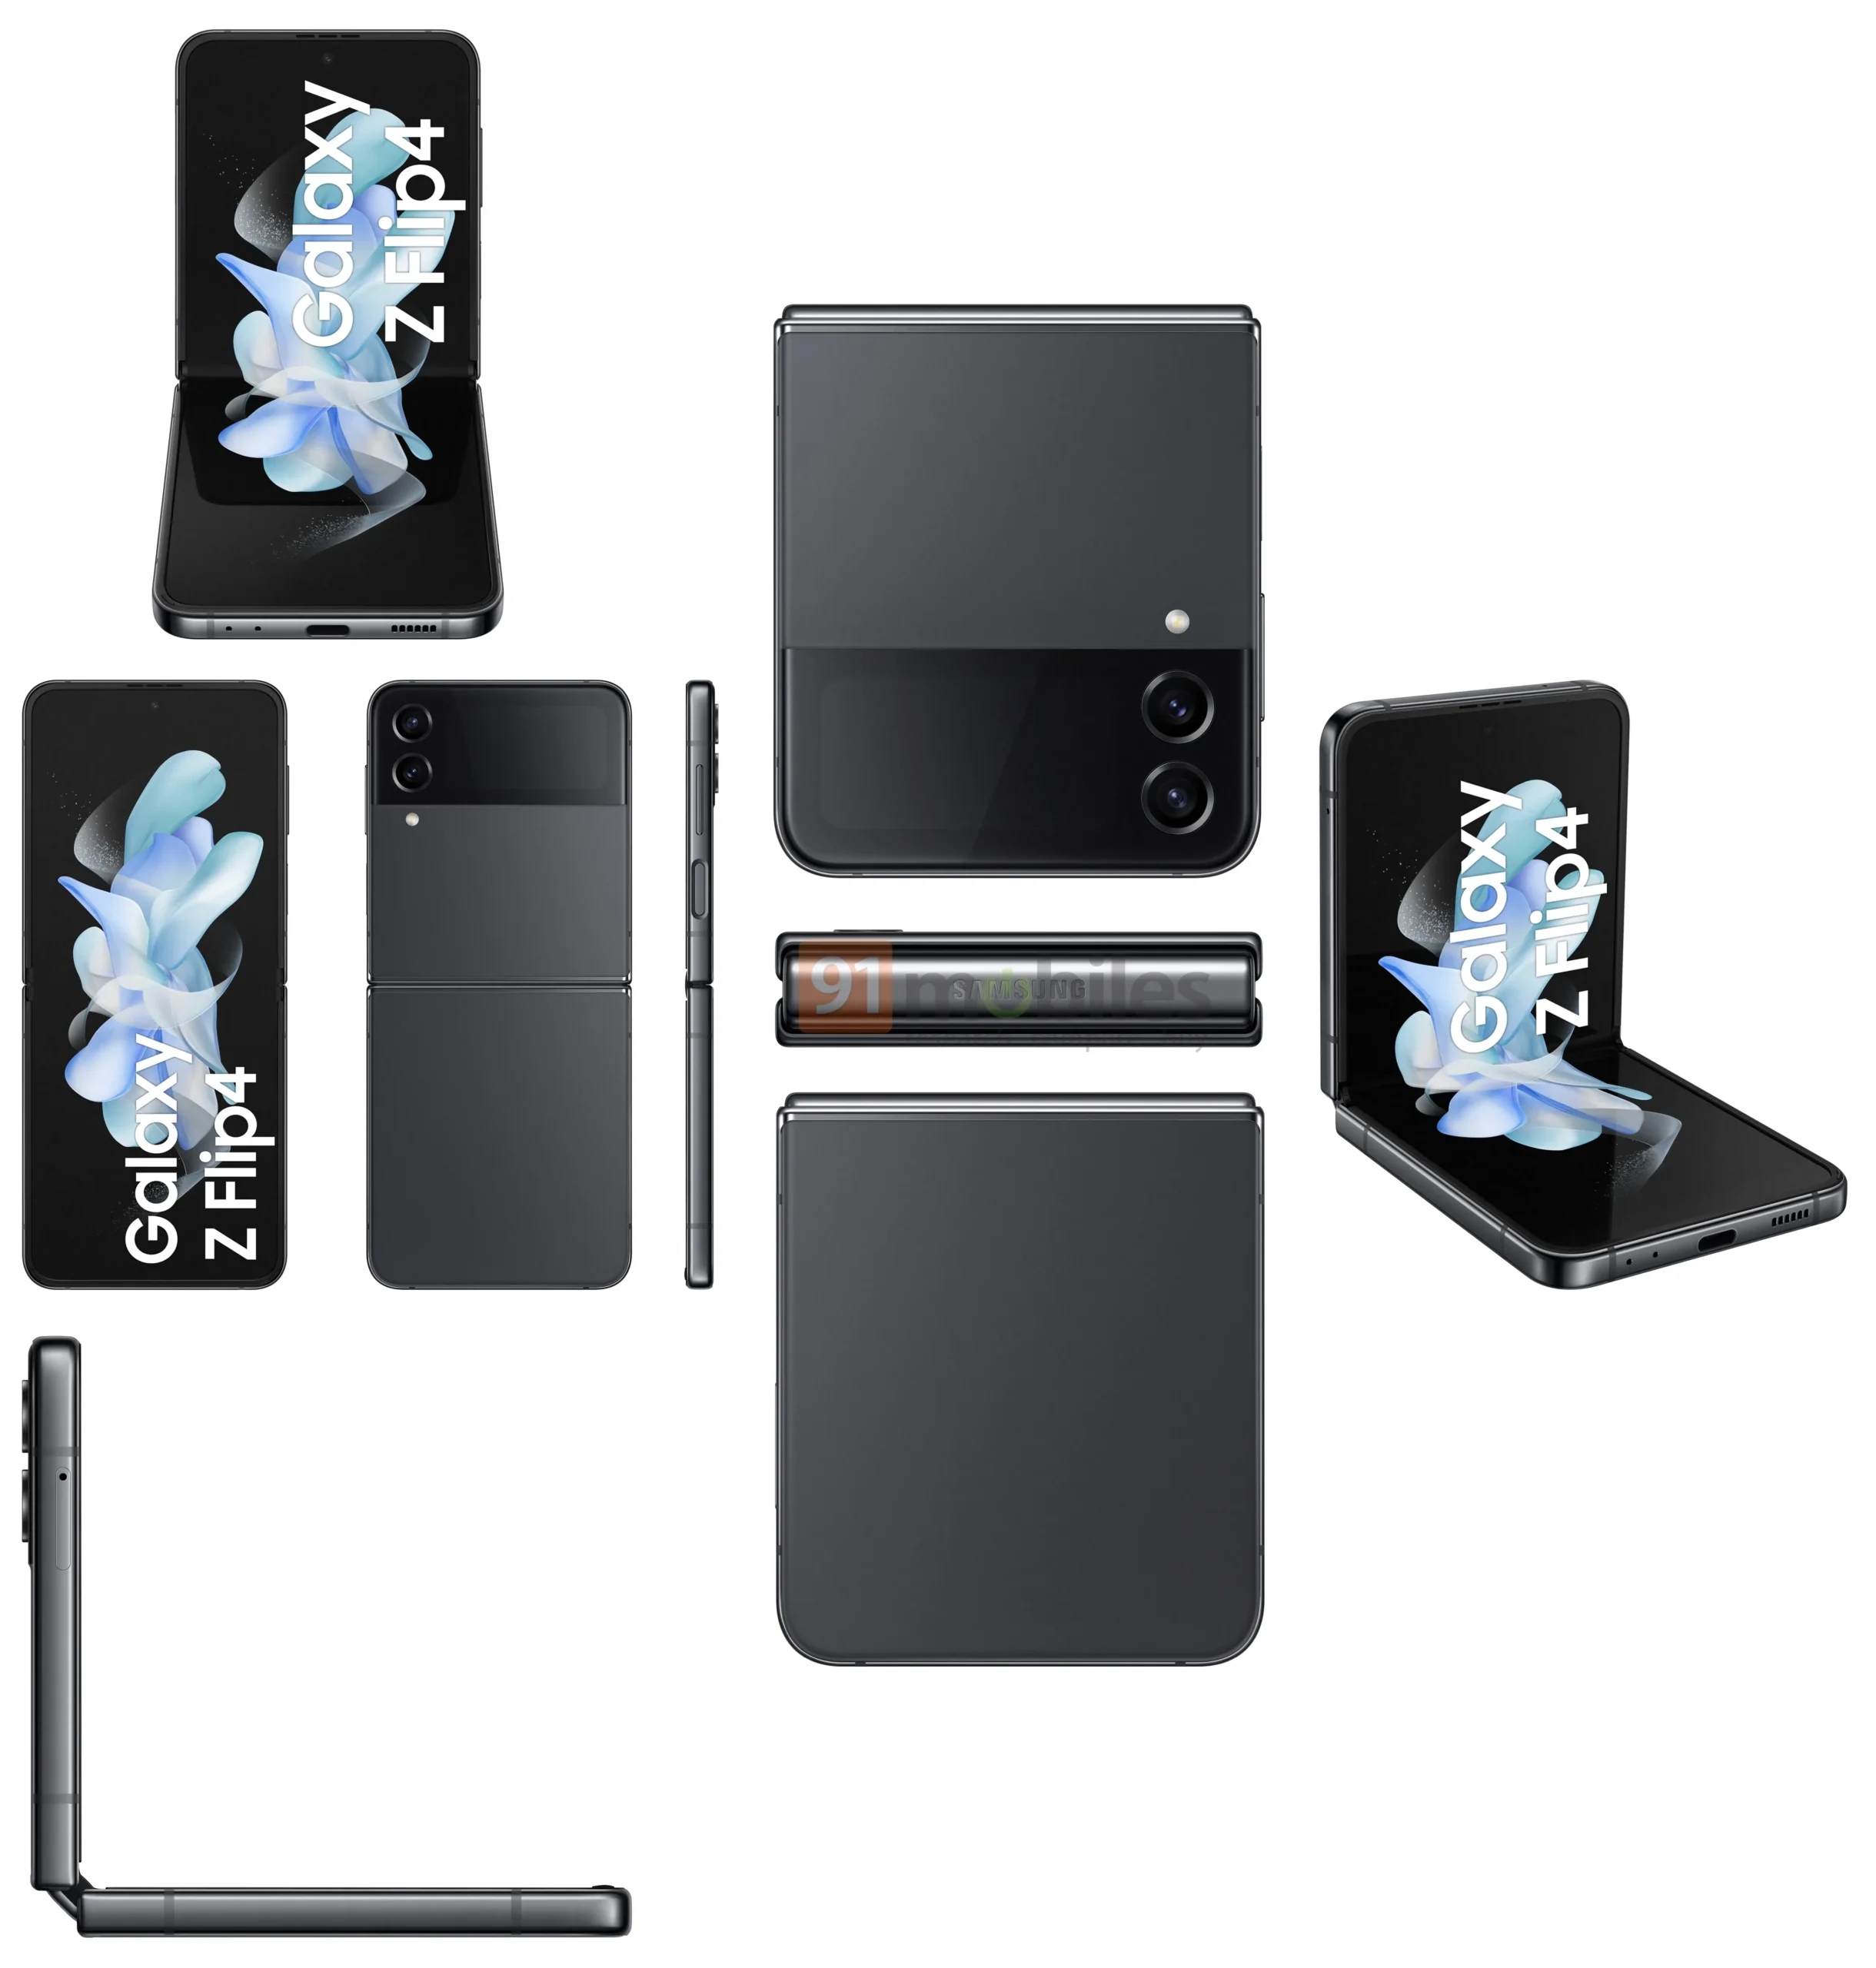 Samsung Galaxy Z Flip 4 - Samsung Galaxy Z Fold 4 e Z Flip 4 ganham novas imagens